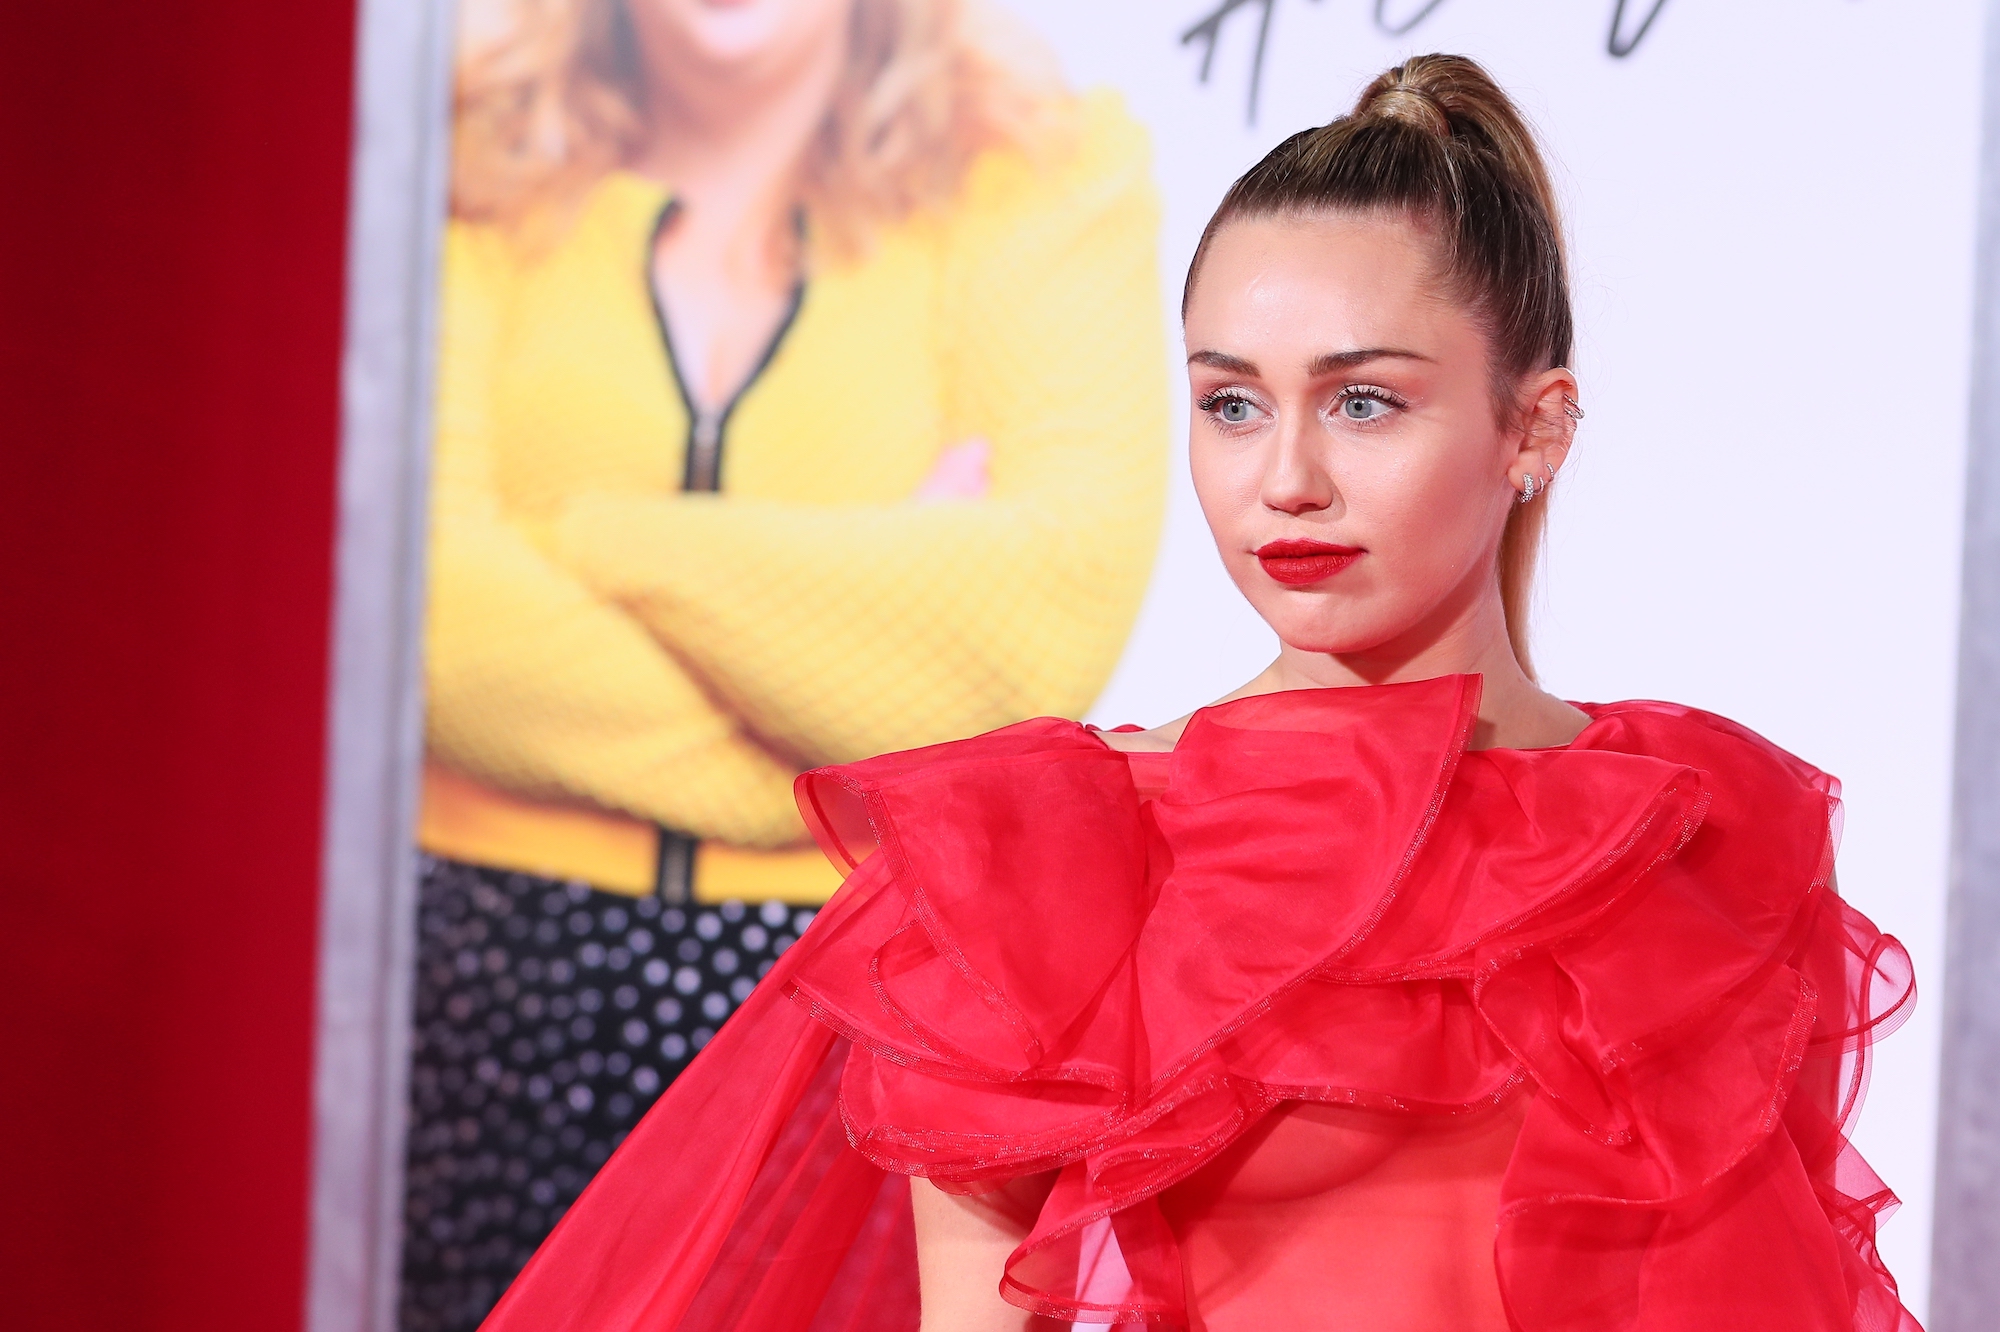 Miley Cyrus attending the "Isn't It Romantic" premiere